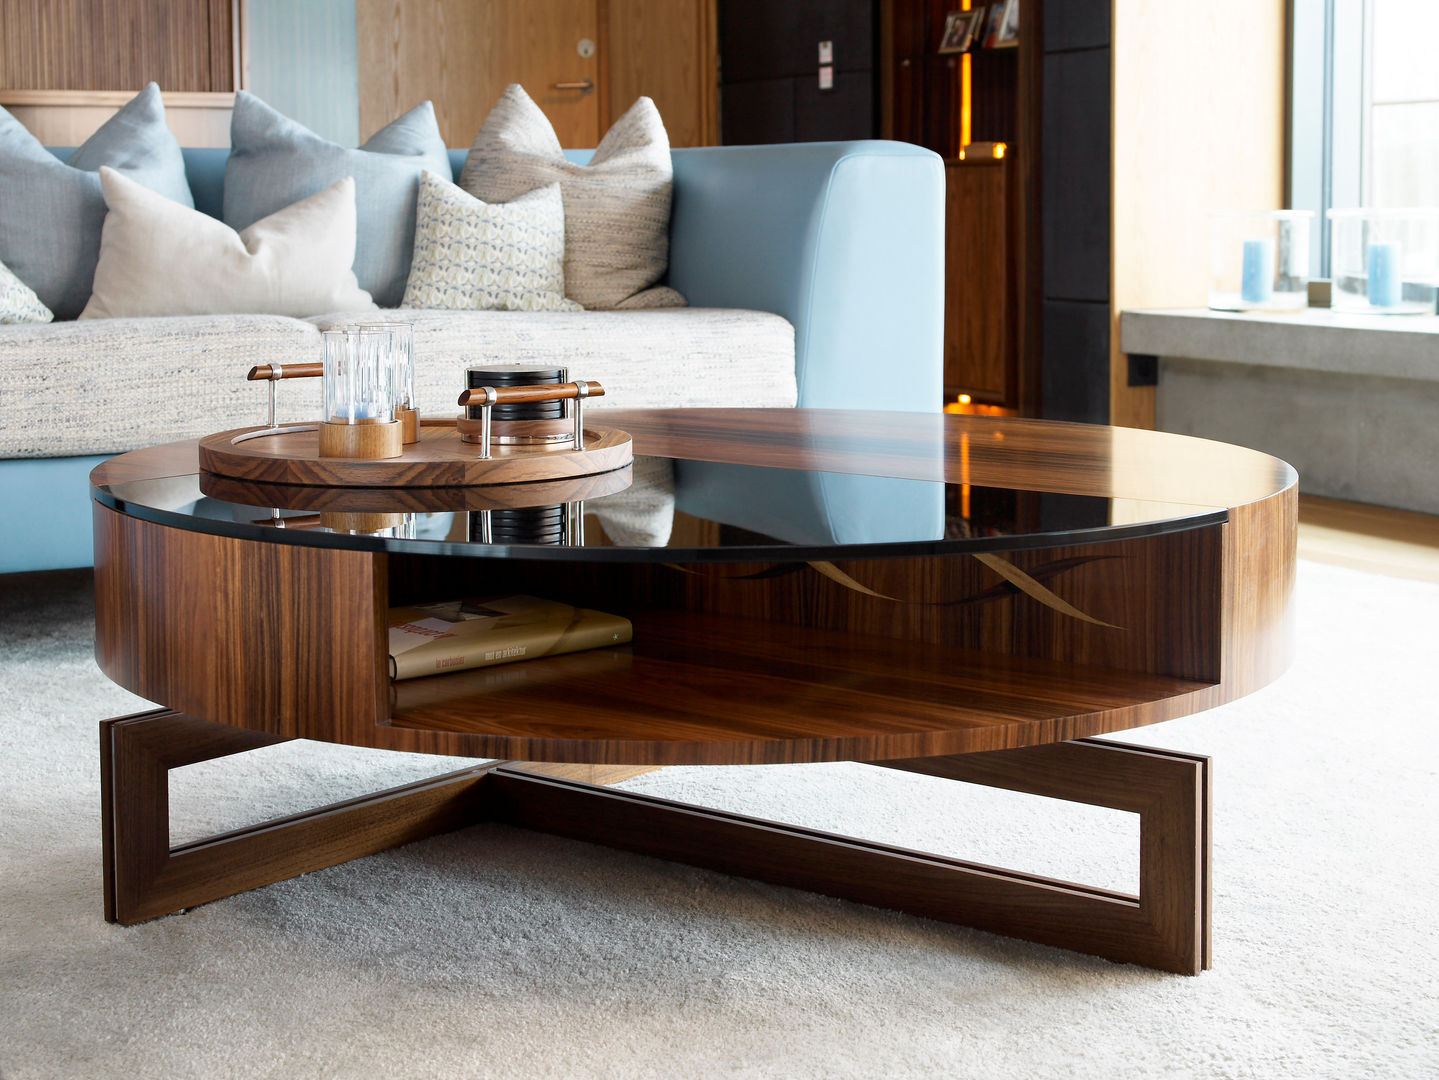 The perfect coffee table - Private Residence, Oslo LINLEY London Salas modernas Almacenamiento